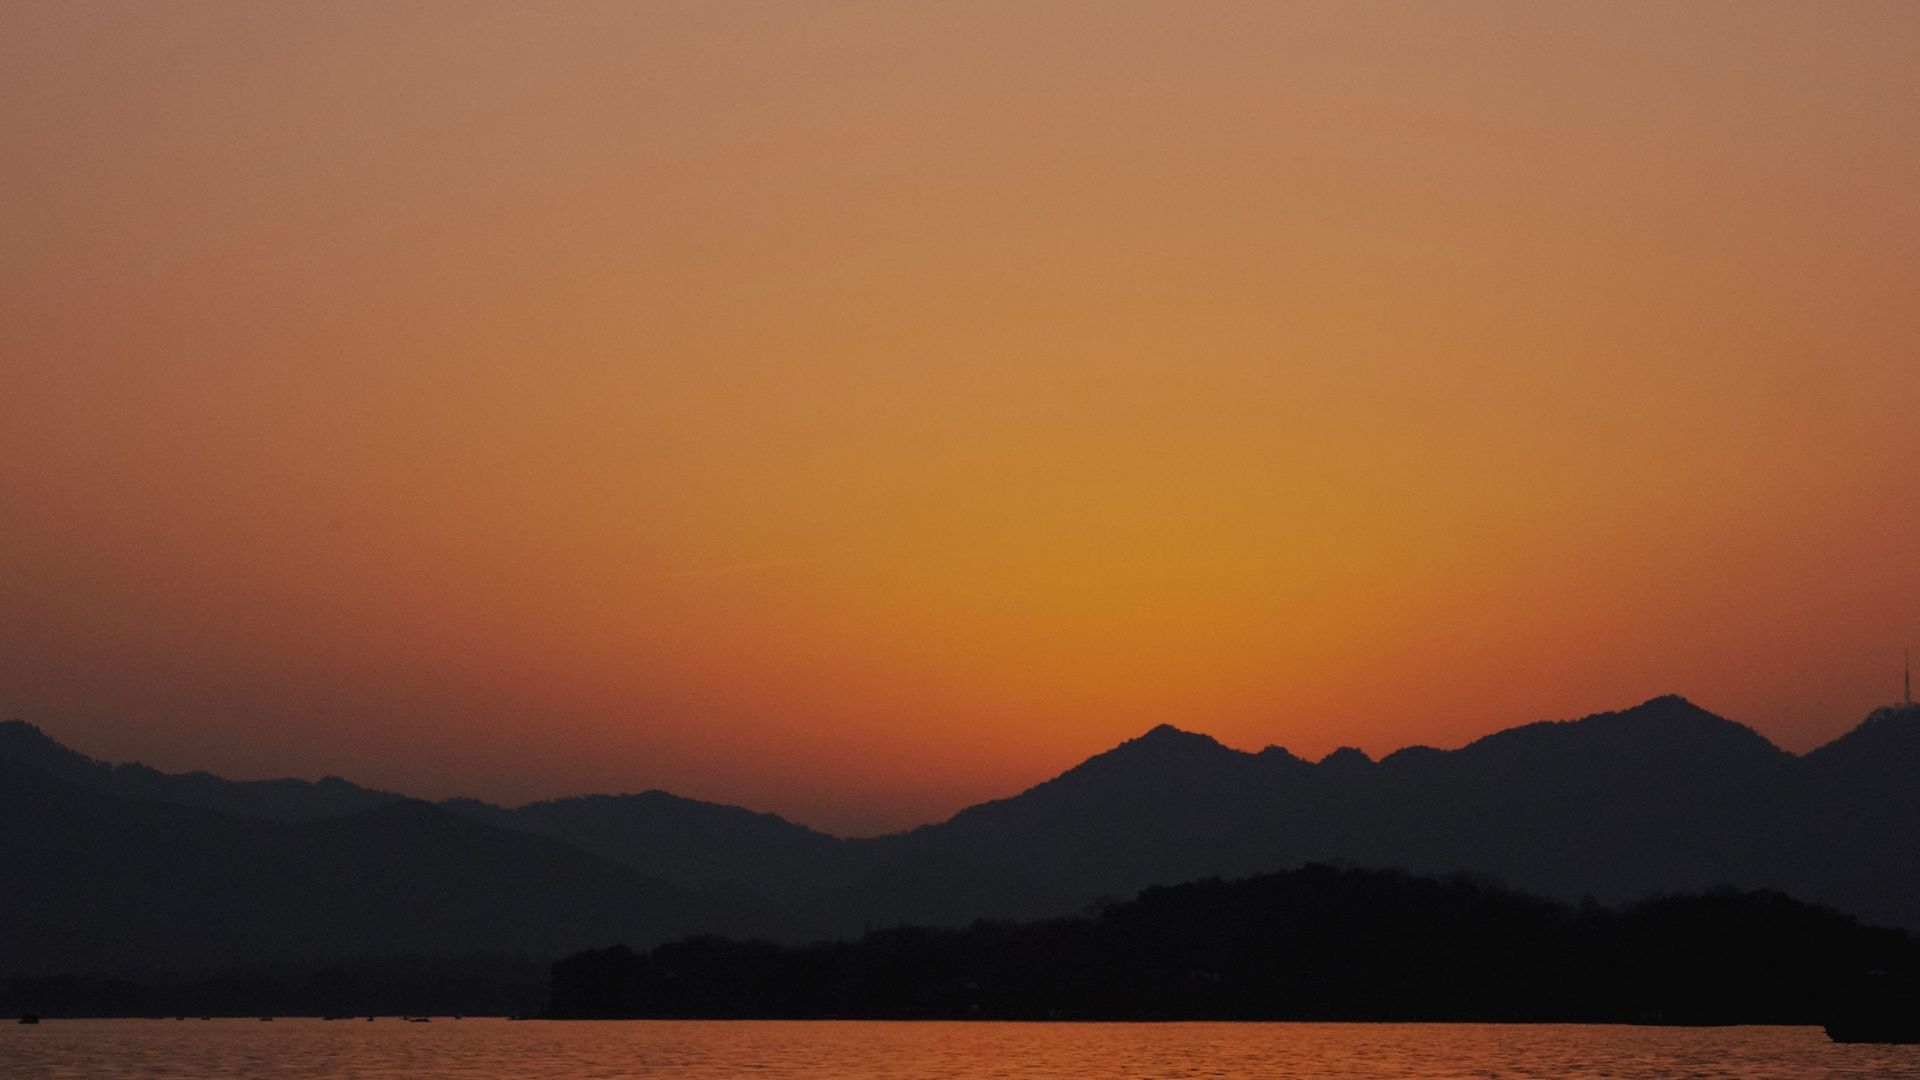 Minimal, sunset, lake, mountains wallpaper, HD image, picture, background, 077bbb